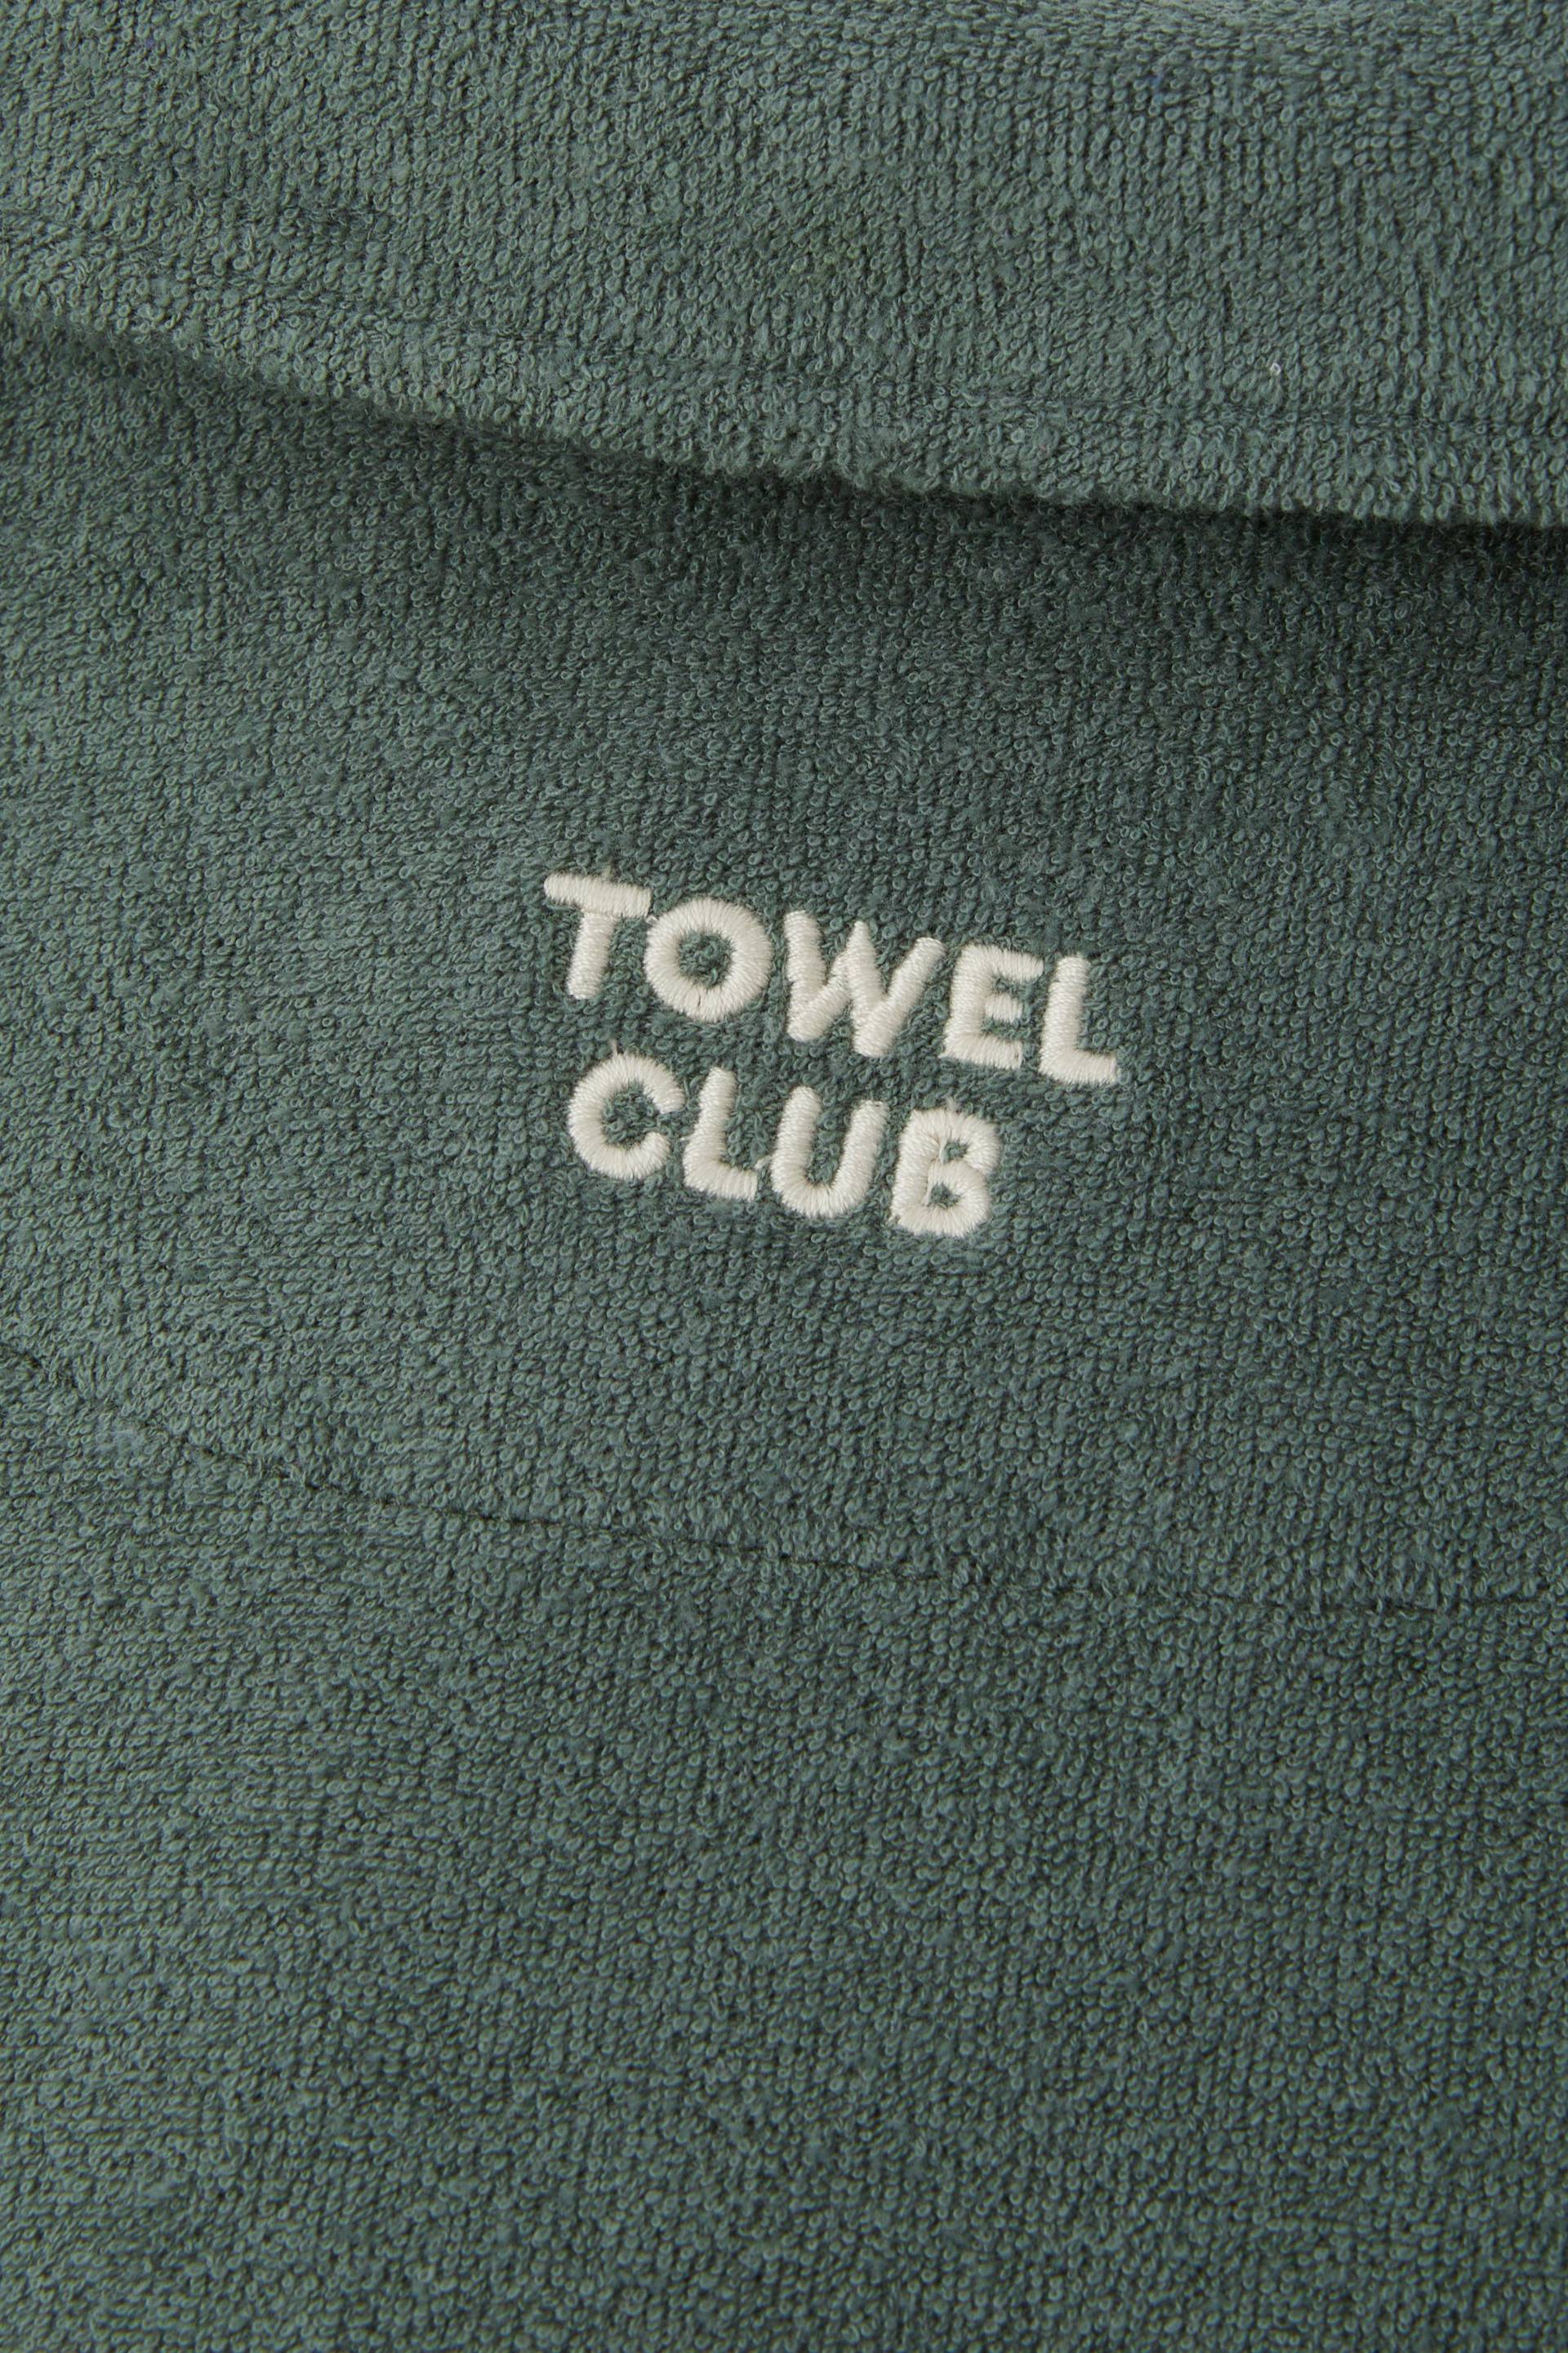 Towel Club Towel Club Piquet Tshirt Dusty Green - 4